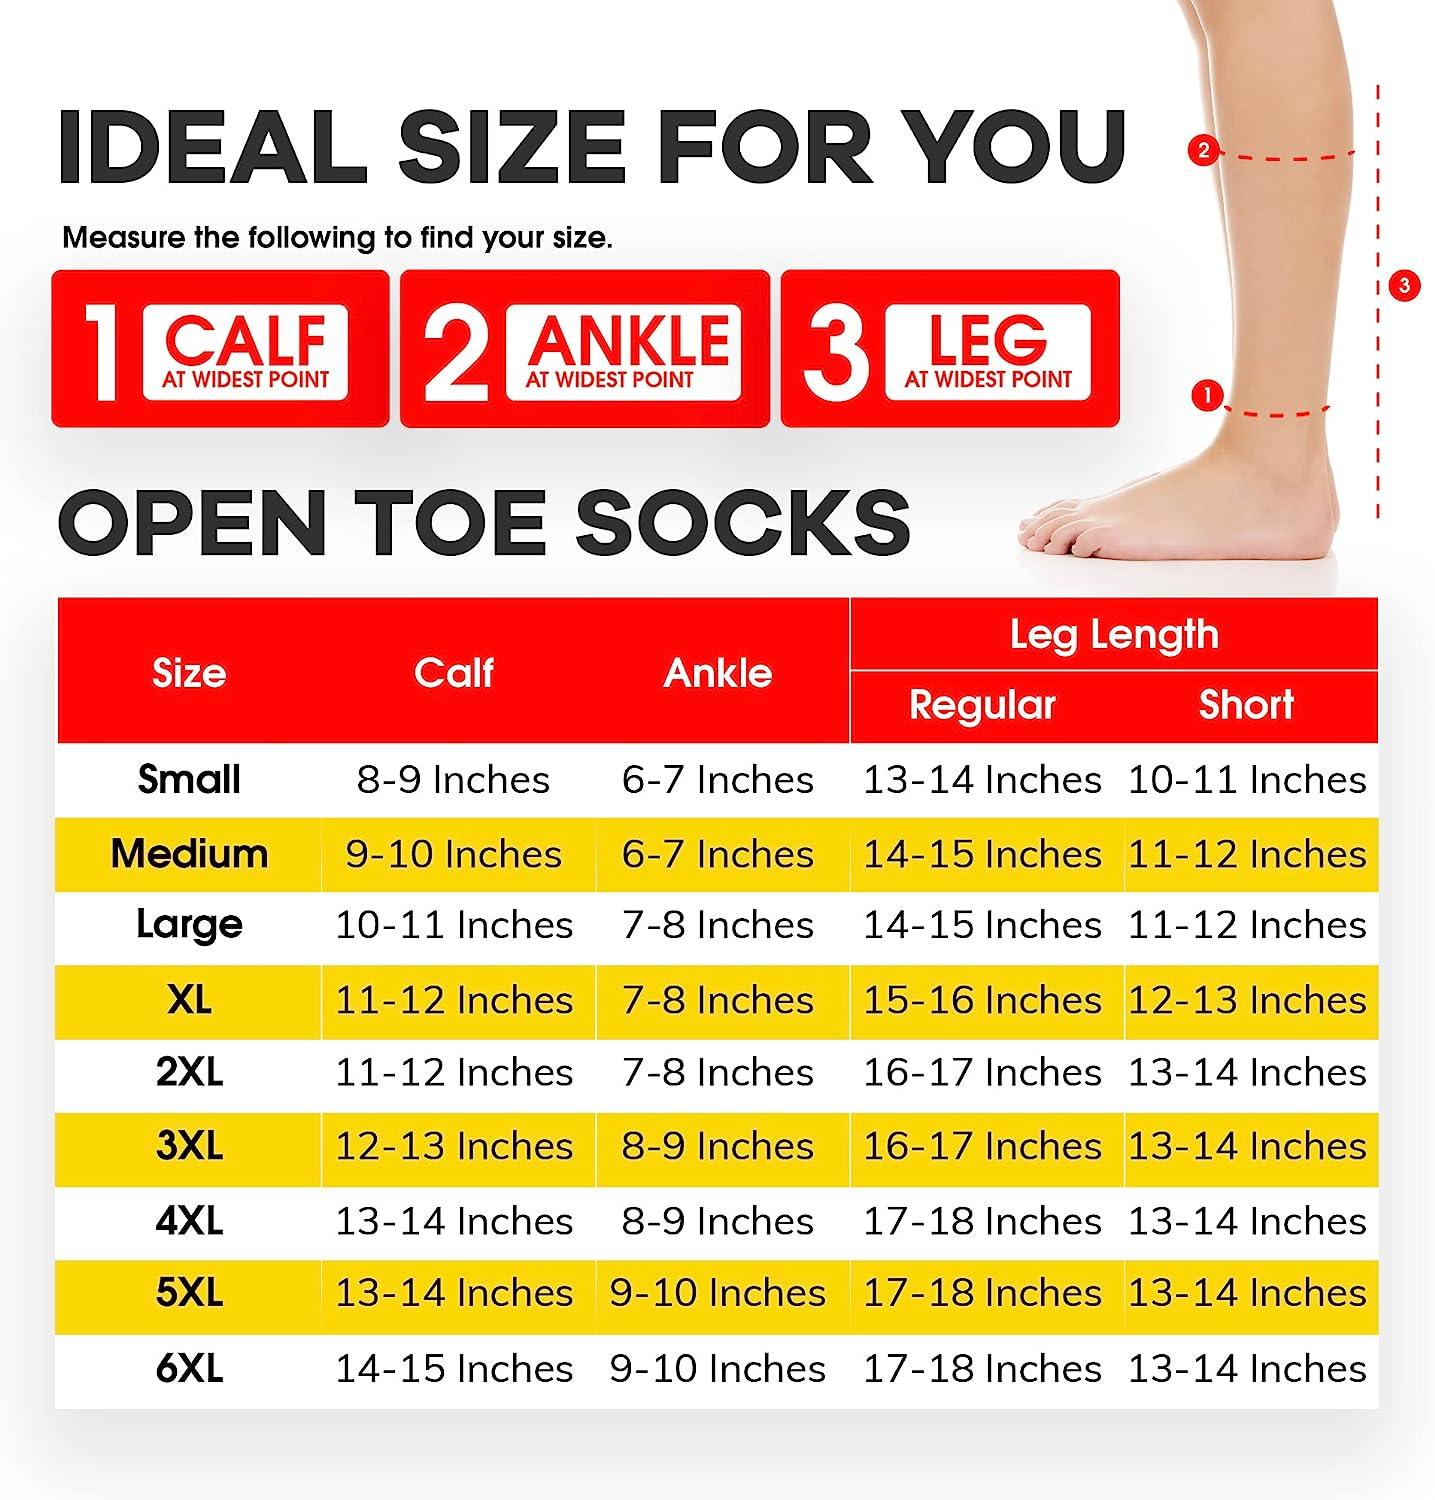 2XL Plus Size Compression Stockings for Men & Women 20-30mmHg - Beige, 2XL